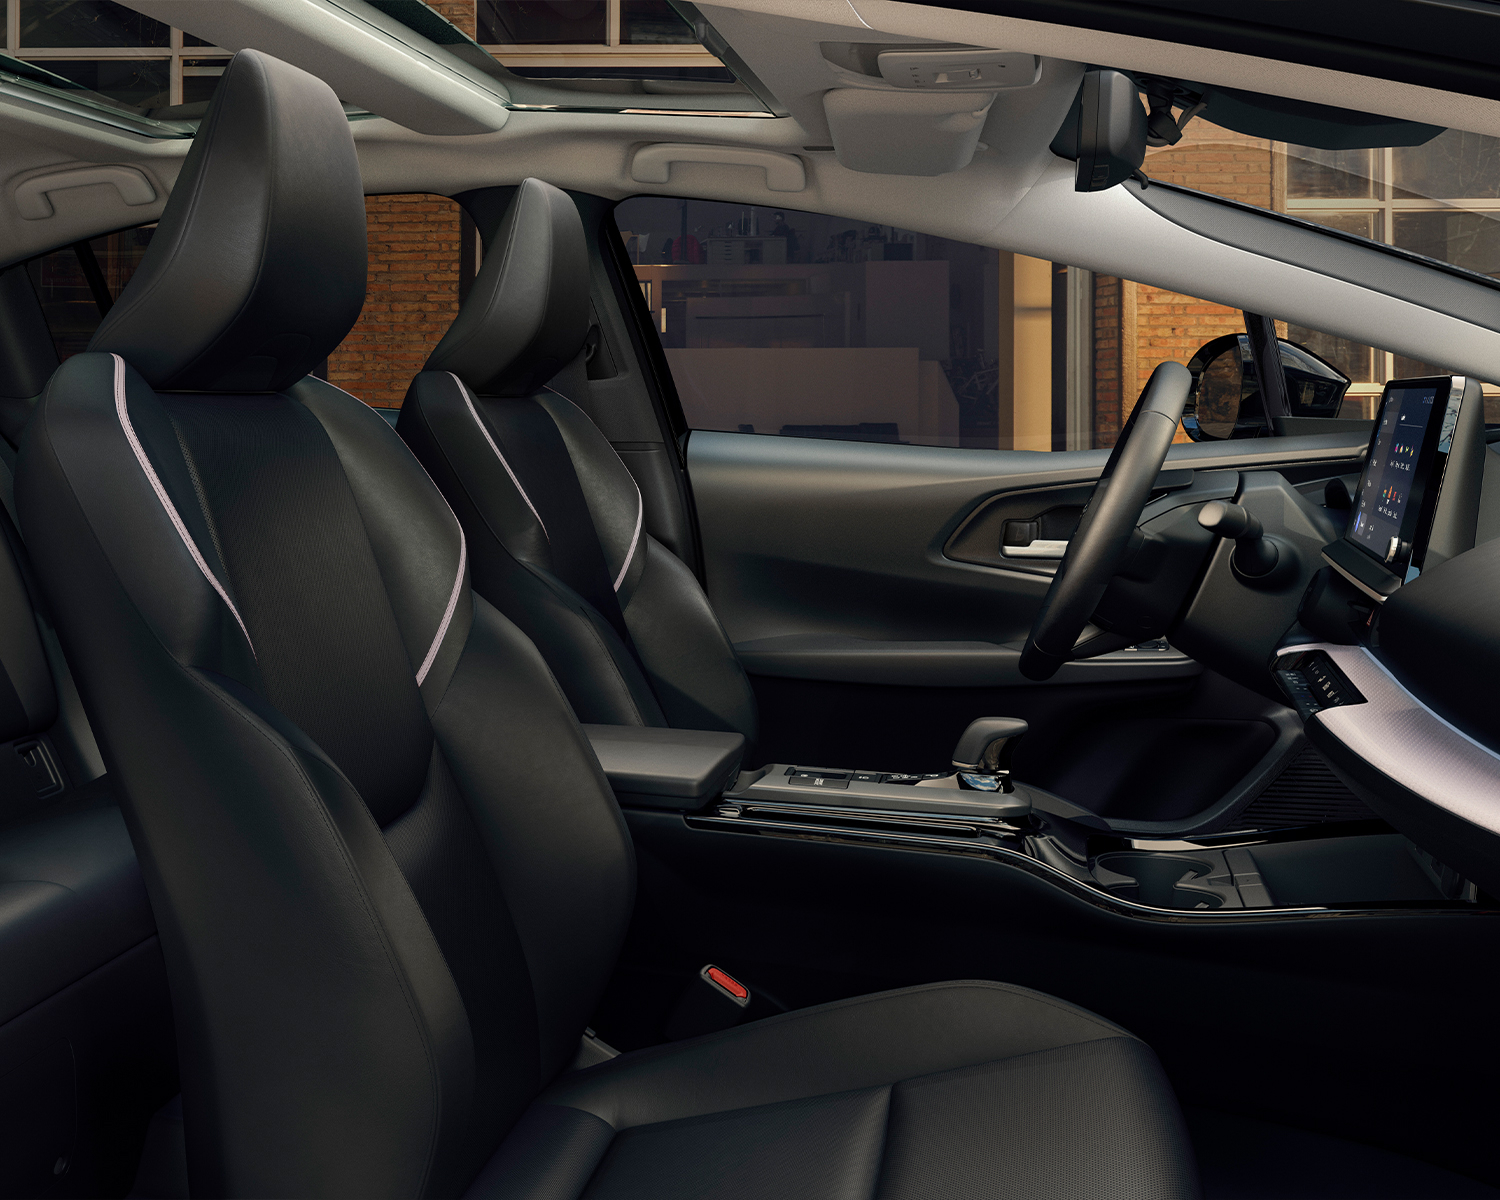 Prius interior shown in Black SofTex